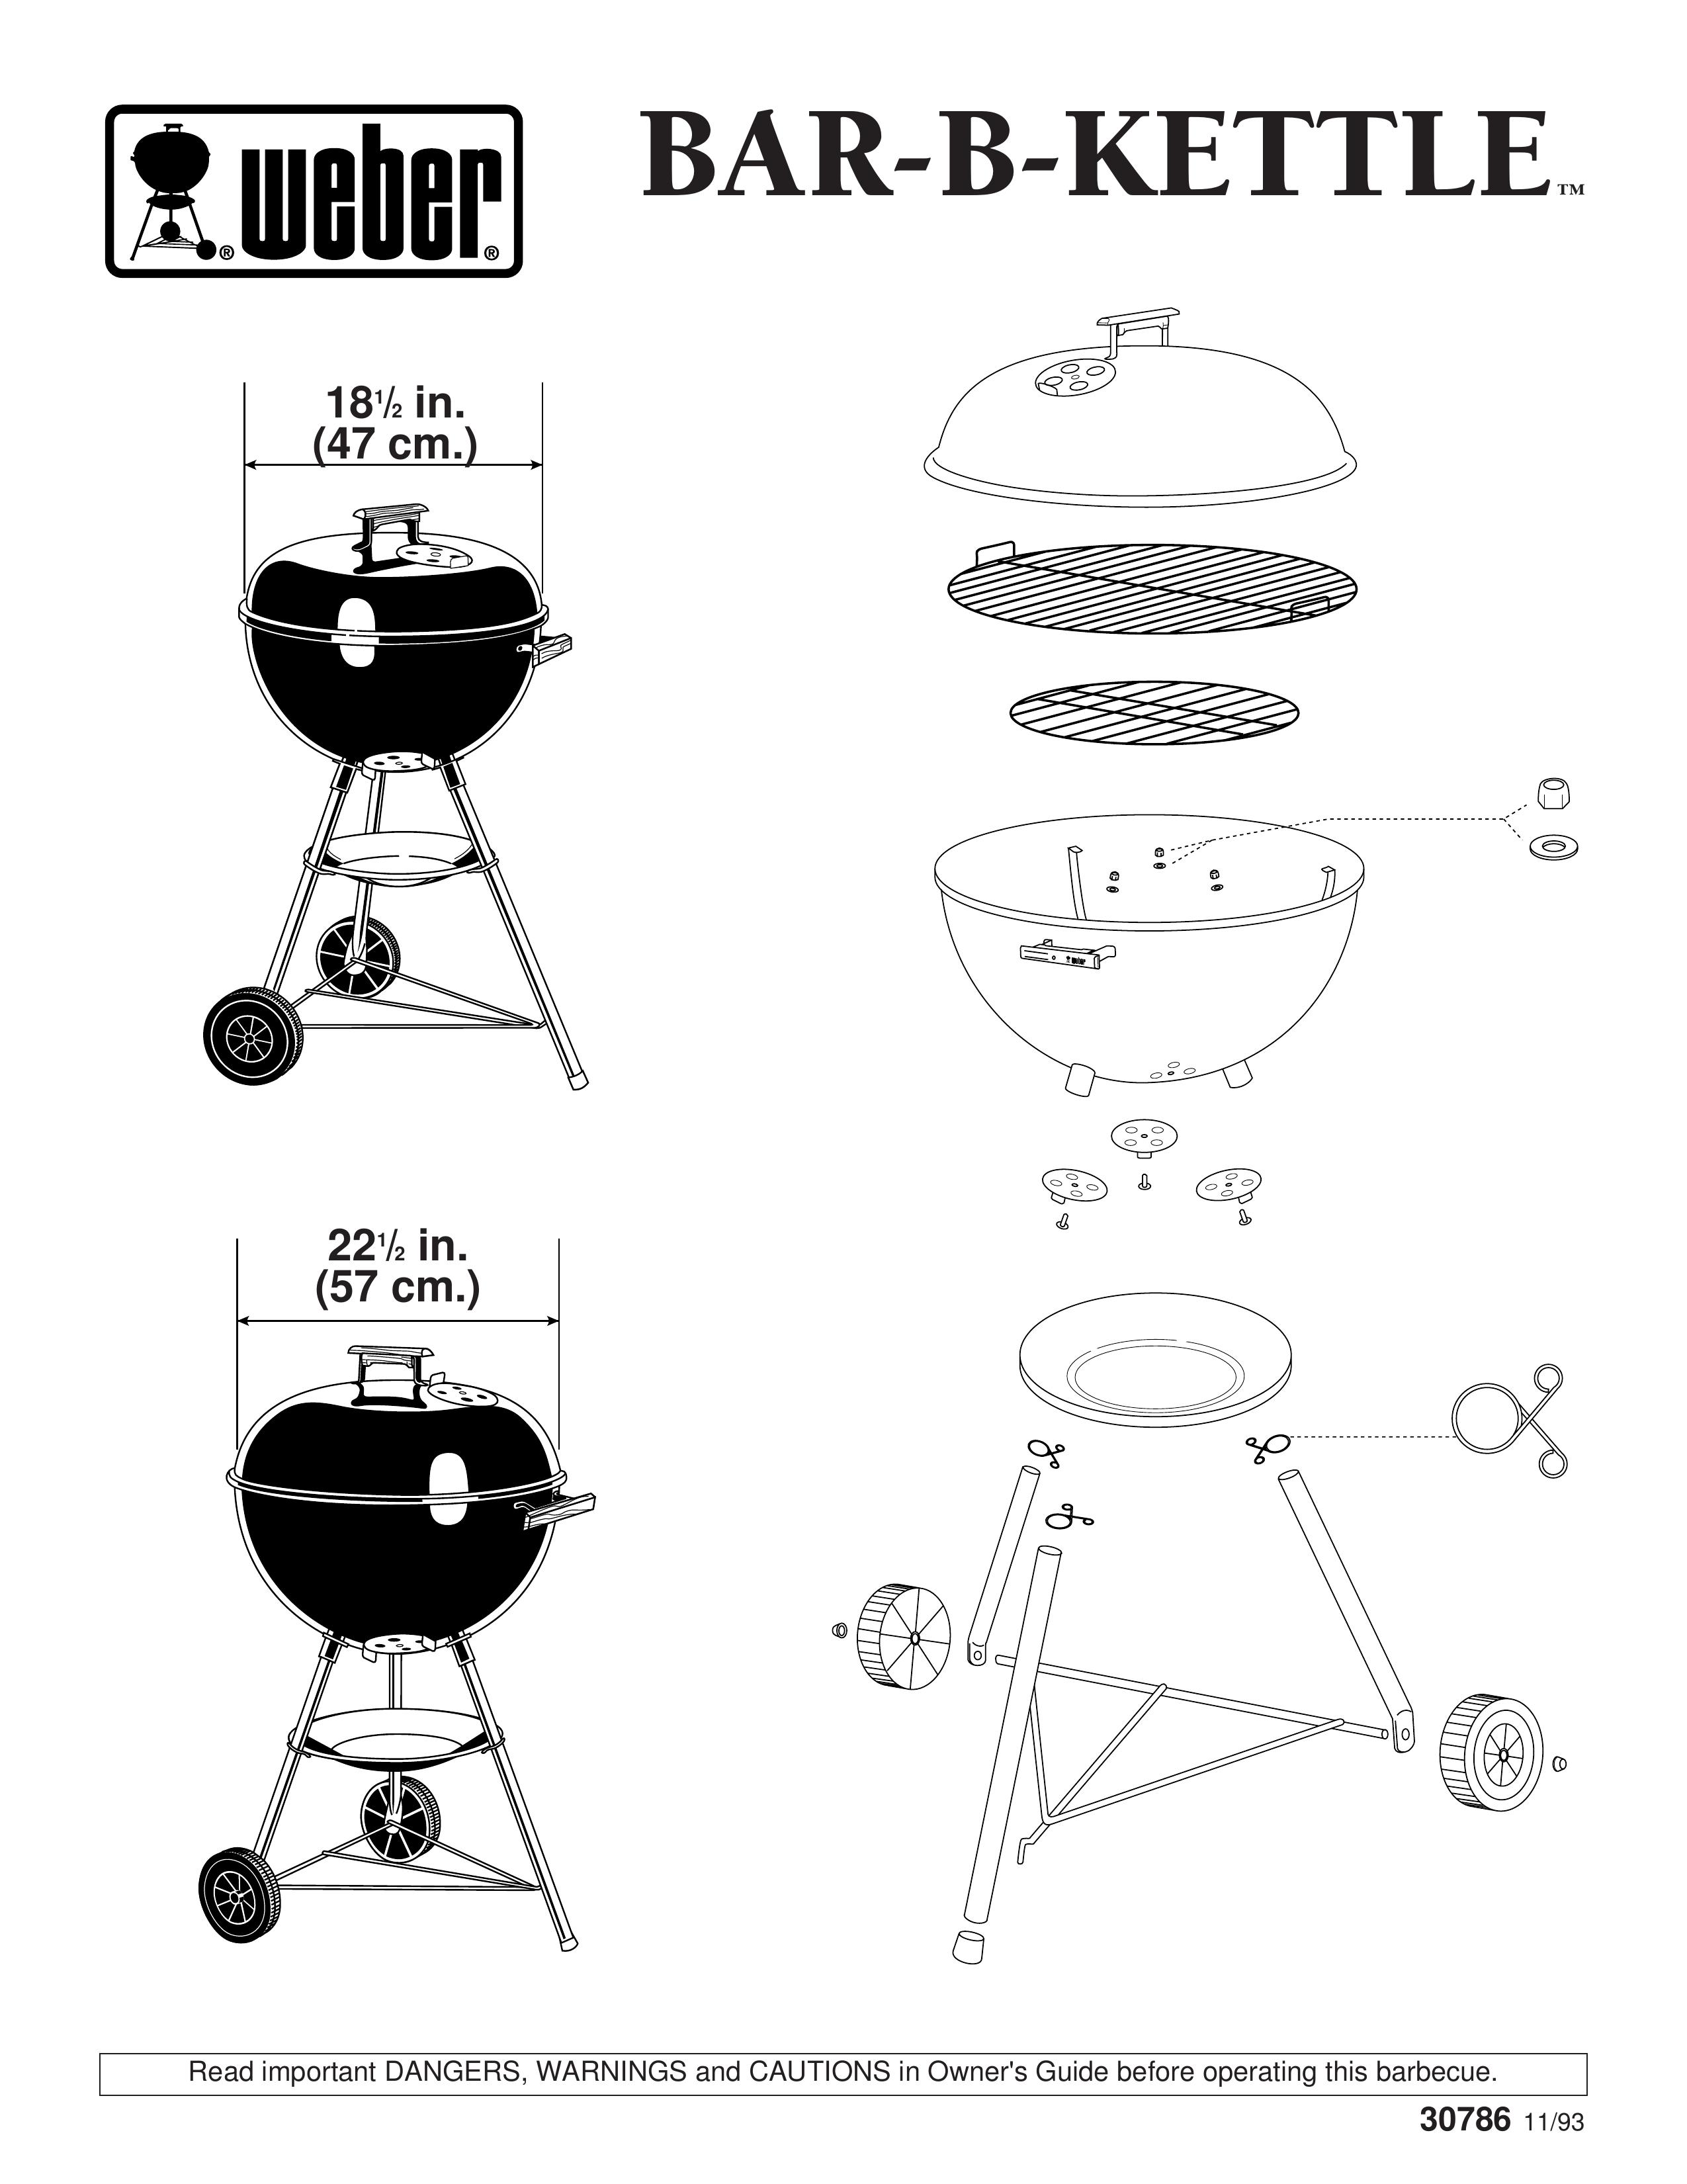 Weber BAR-B-KETTLE Charcoal Grill User Manual